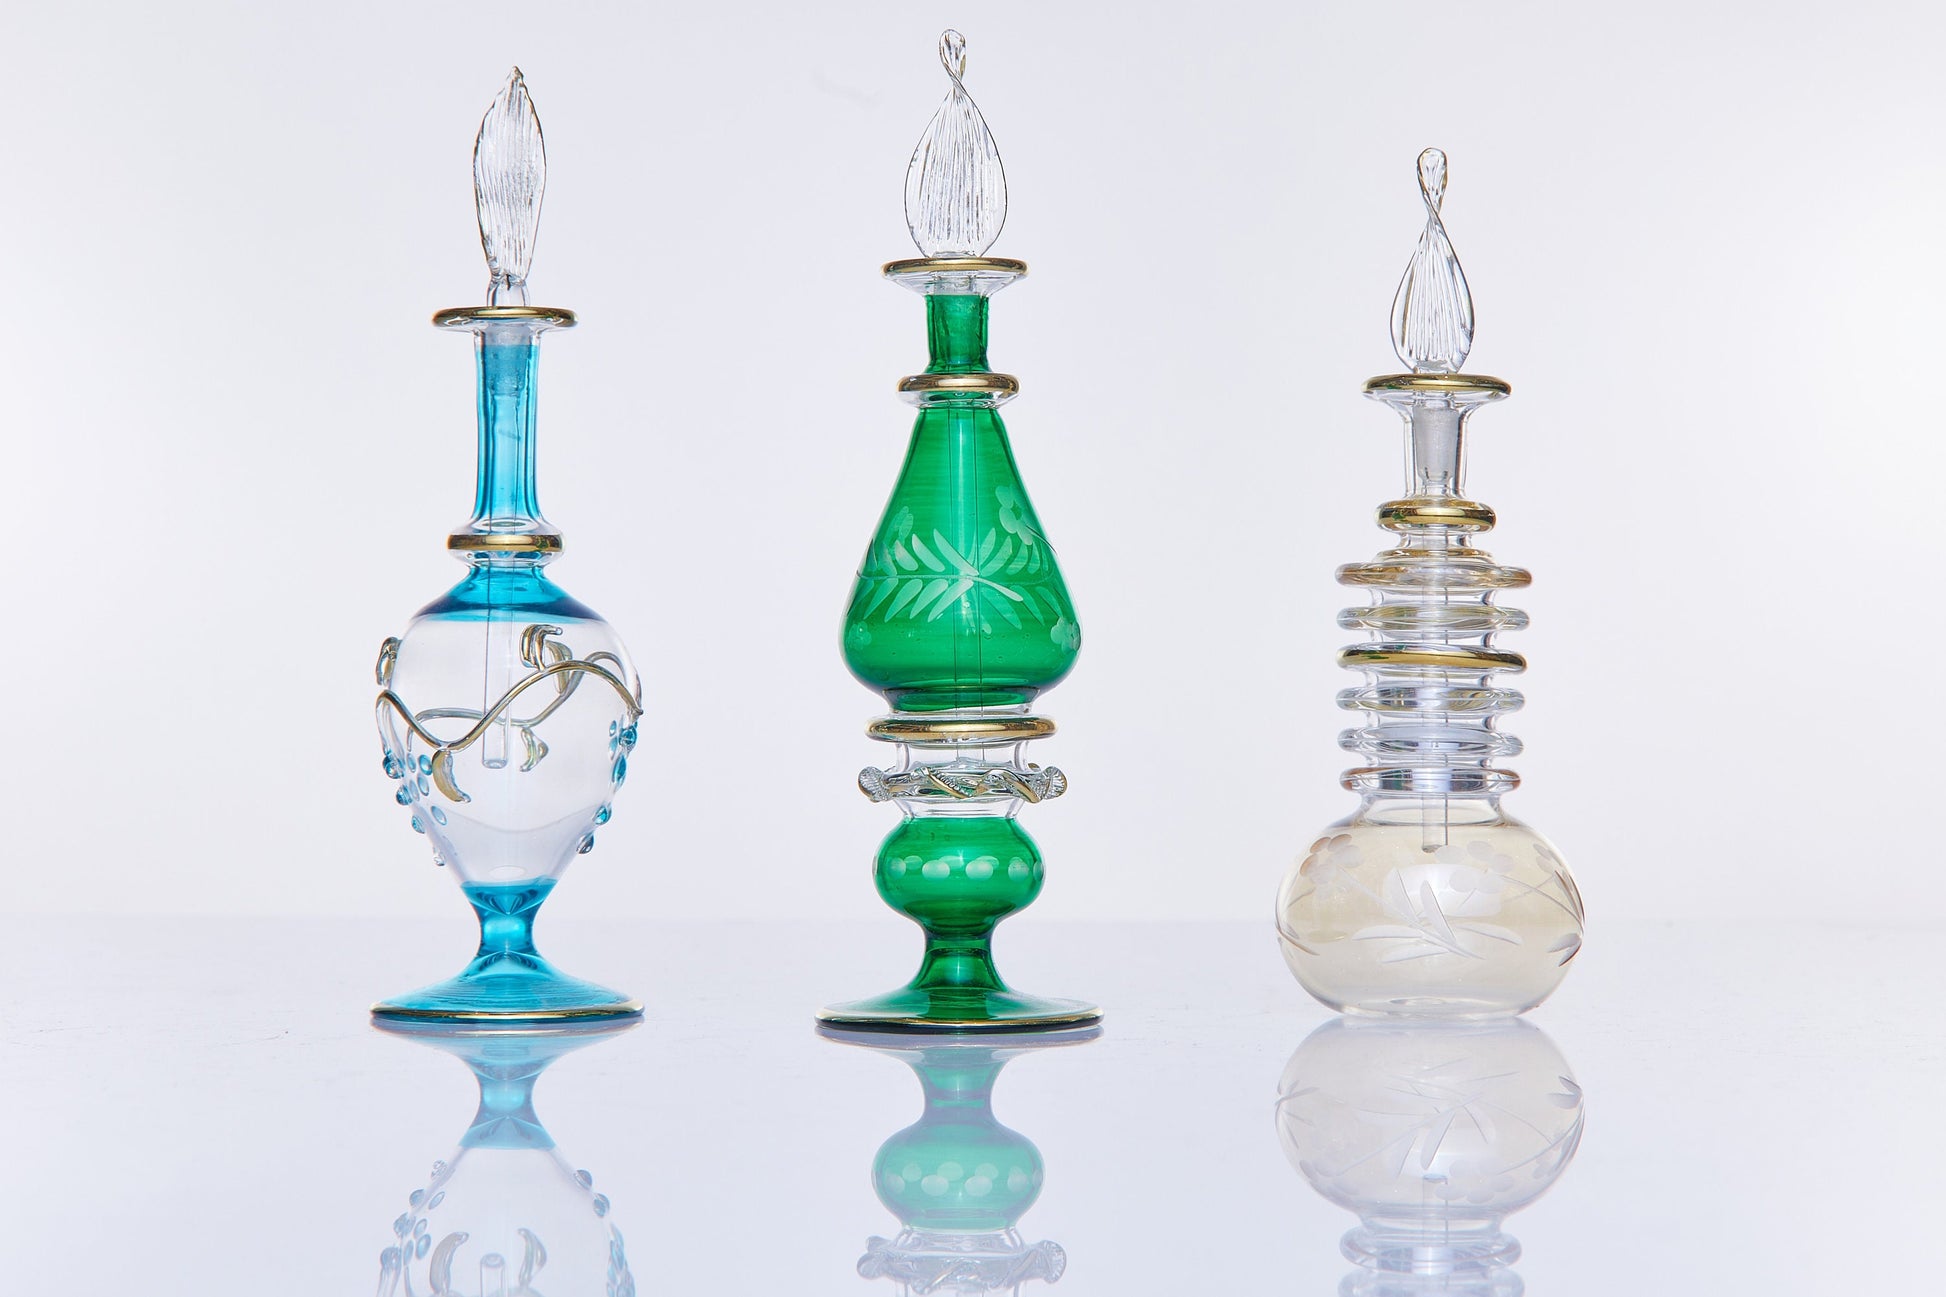 Egyptian Essential Oil Holder Bottles Set of Three | Perfume Oil Glass Bottles | Hand Painted Blown Glass Bottles | Vintage Perfume Bottles - Les Trois Pyramides